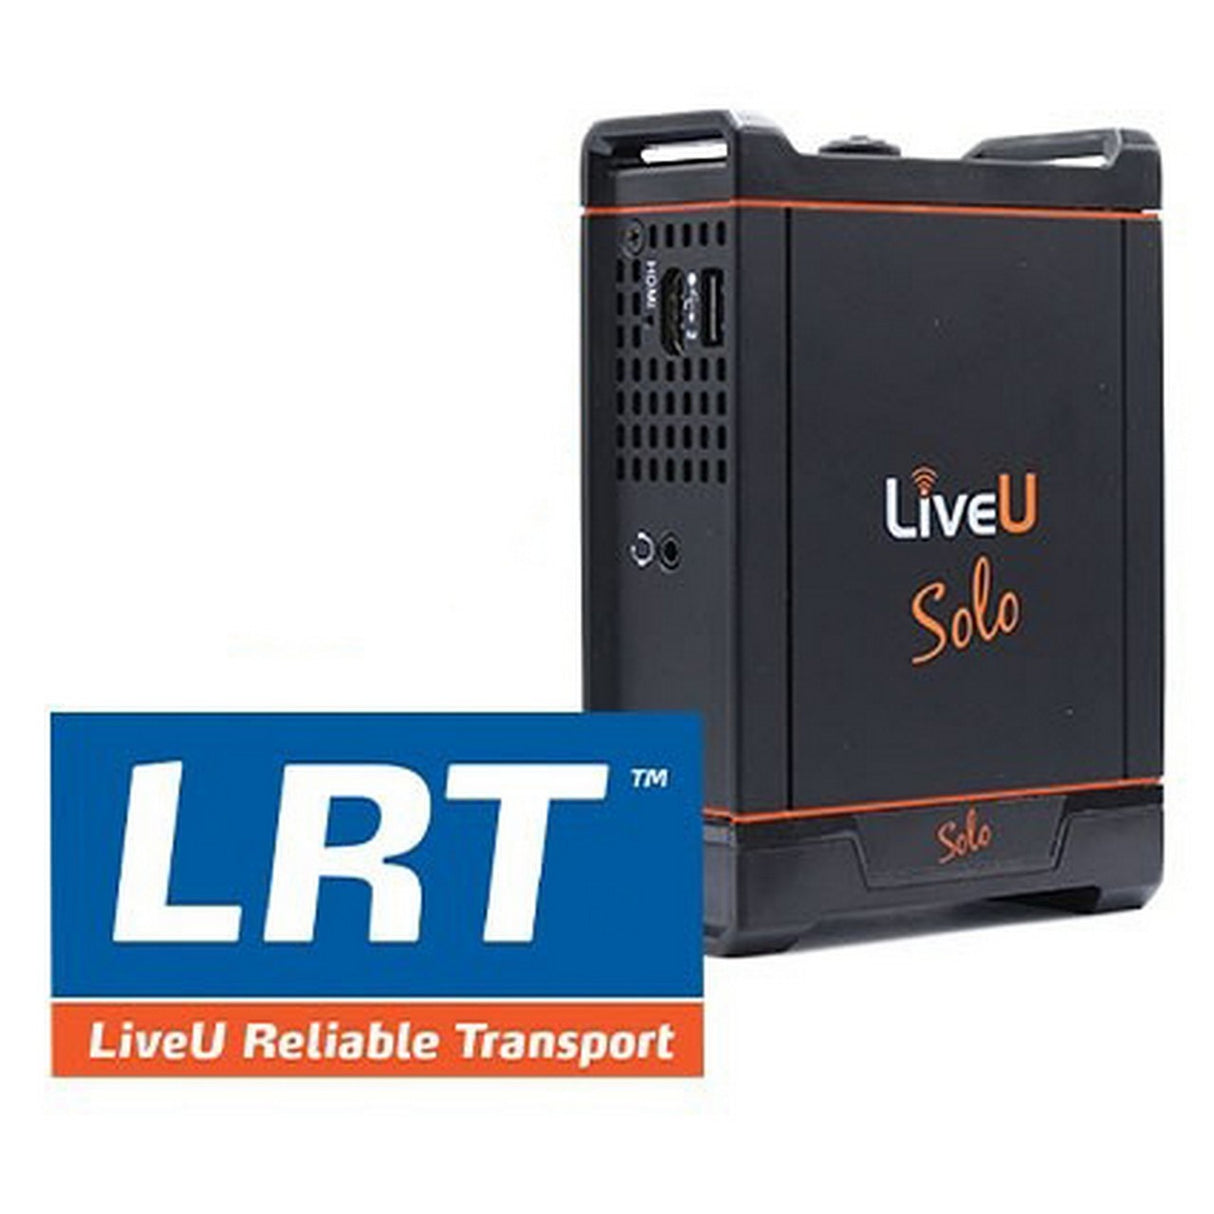 LiveU Solo HDMI | Premium Video Encoder with 1 Year LRT Cloud Server